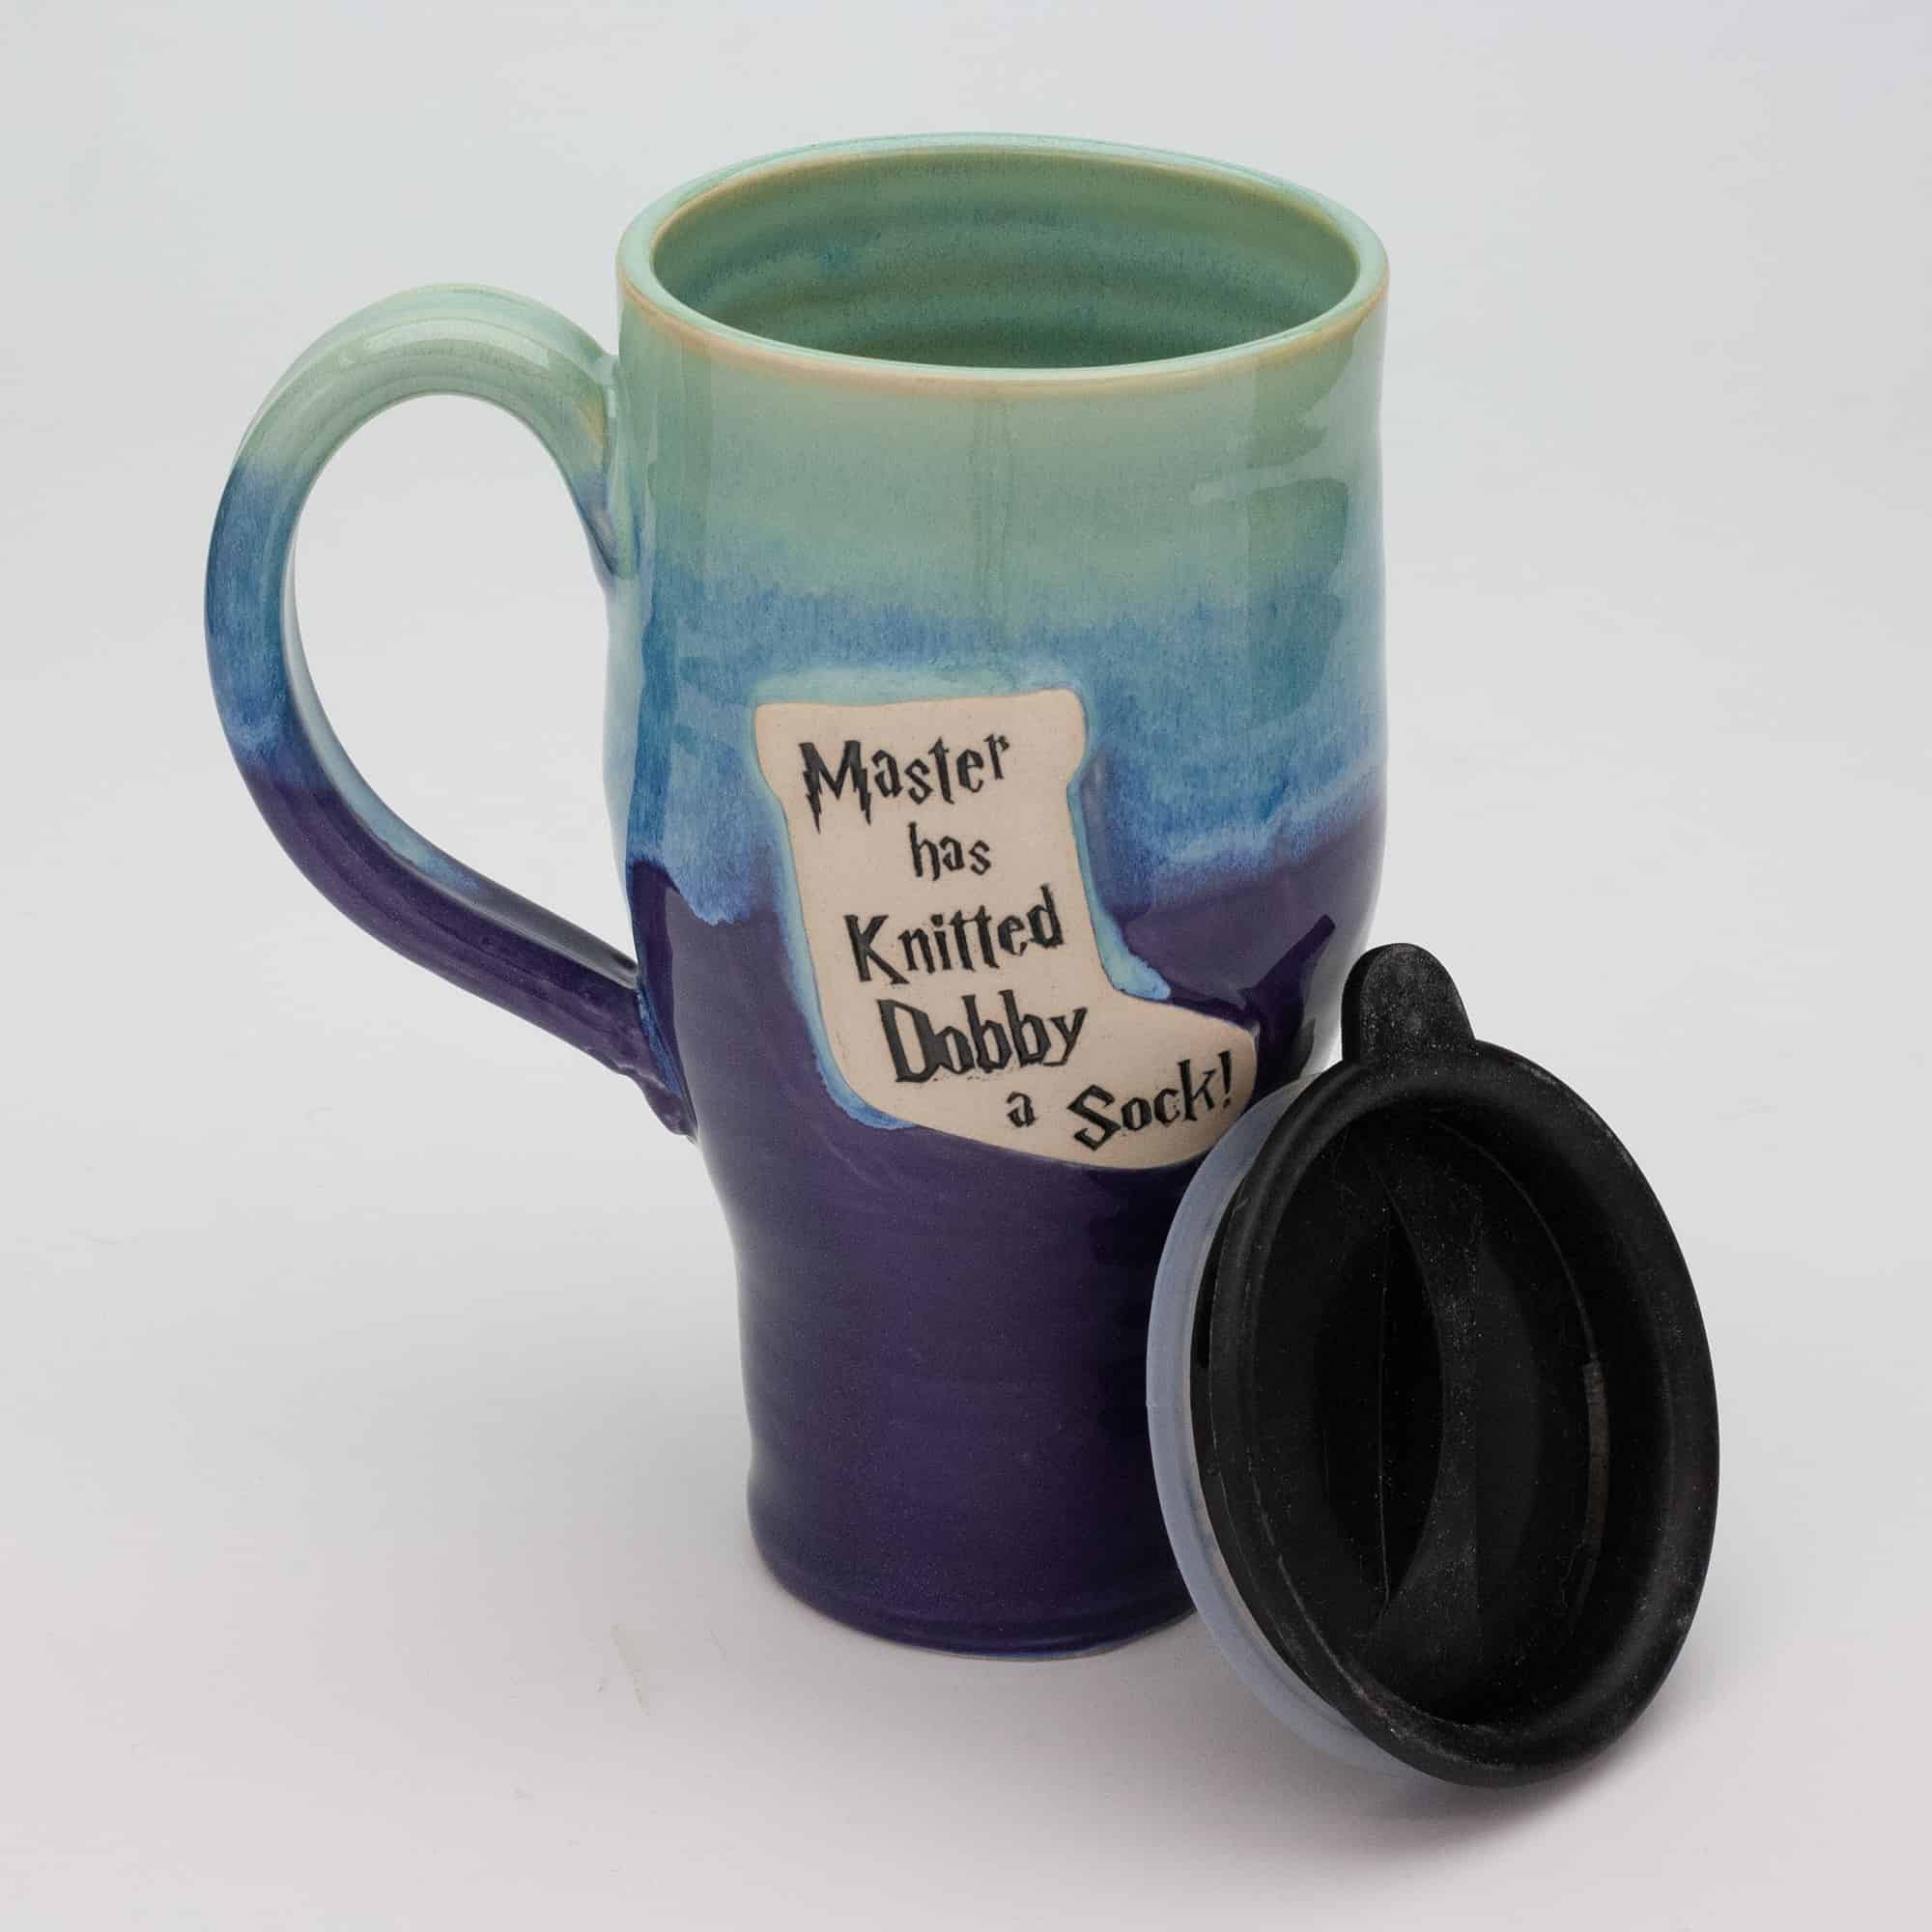 Ravenclaw's Seal - Travel Mug - 16 oz.